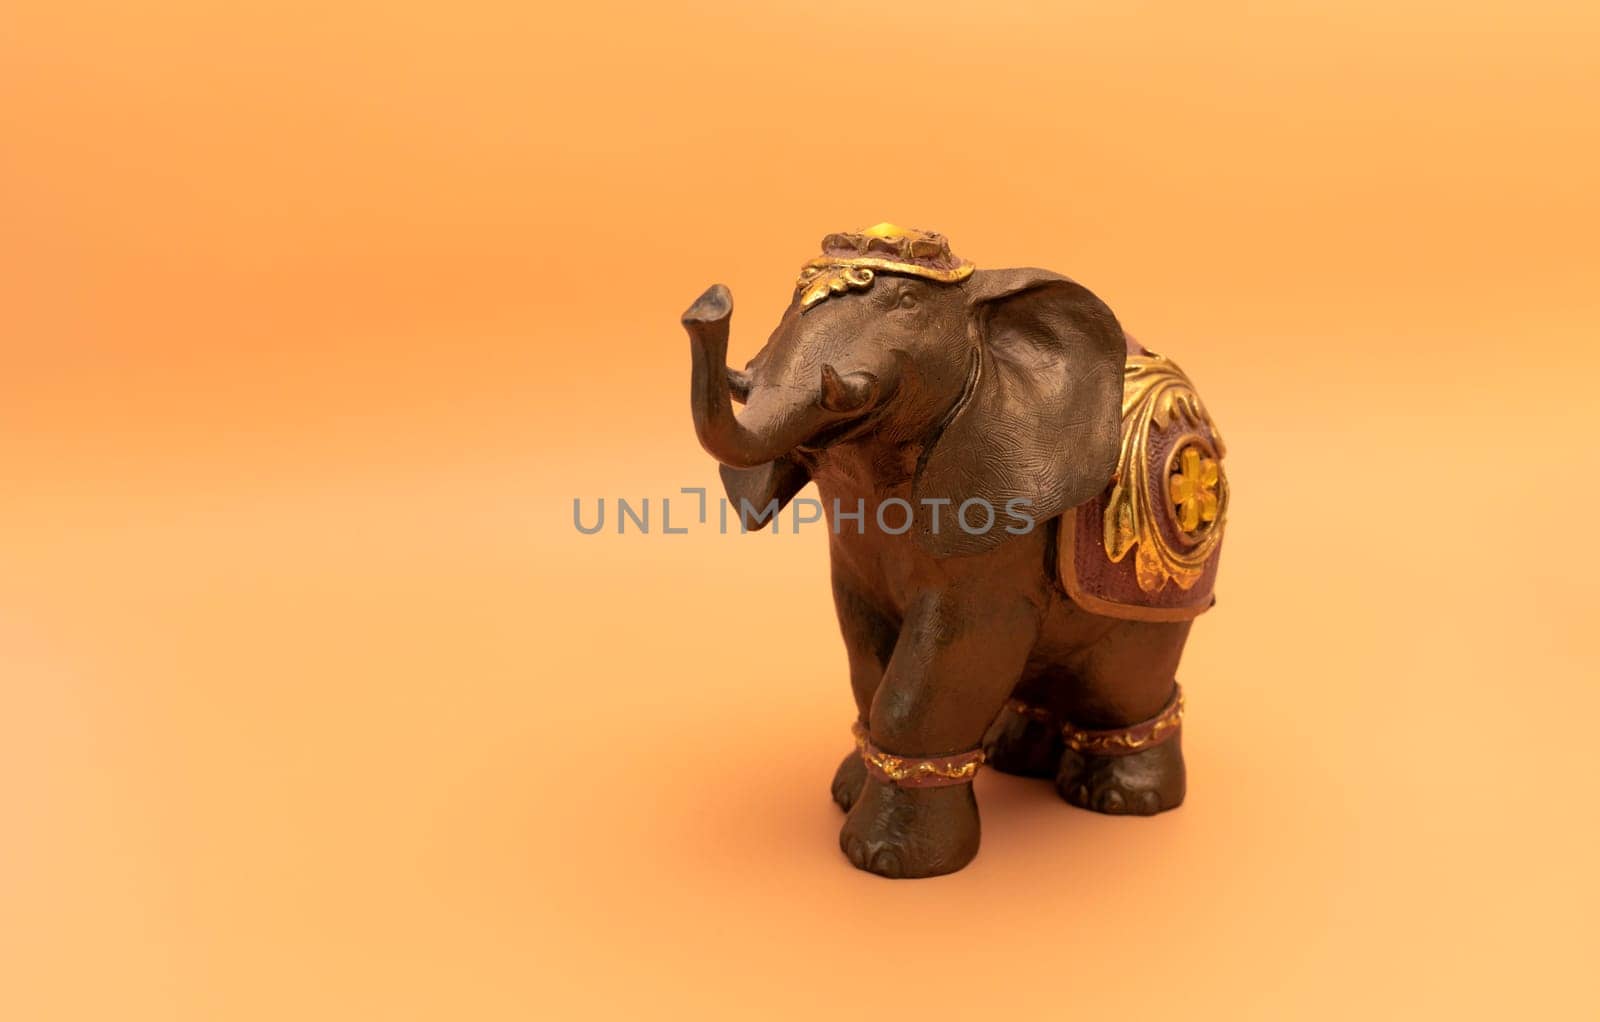 Design Bronze Decorated Elephant On Peach Yellow Background. World Elephant Day. Copy Space, Postal Card. Ganesha Chaturthi Holiday. Sacred Symbol In Hindu And Buddhist Religions. Design, Horizontal by netatsi